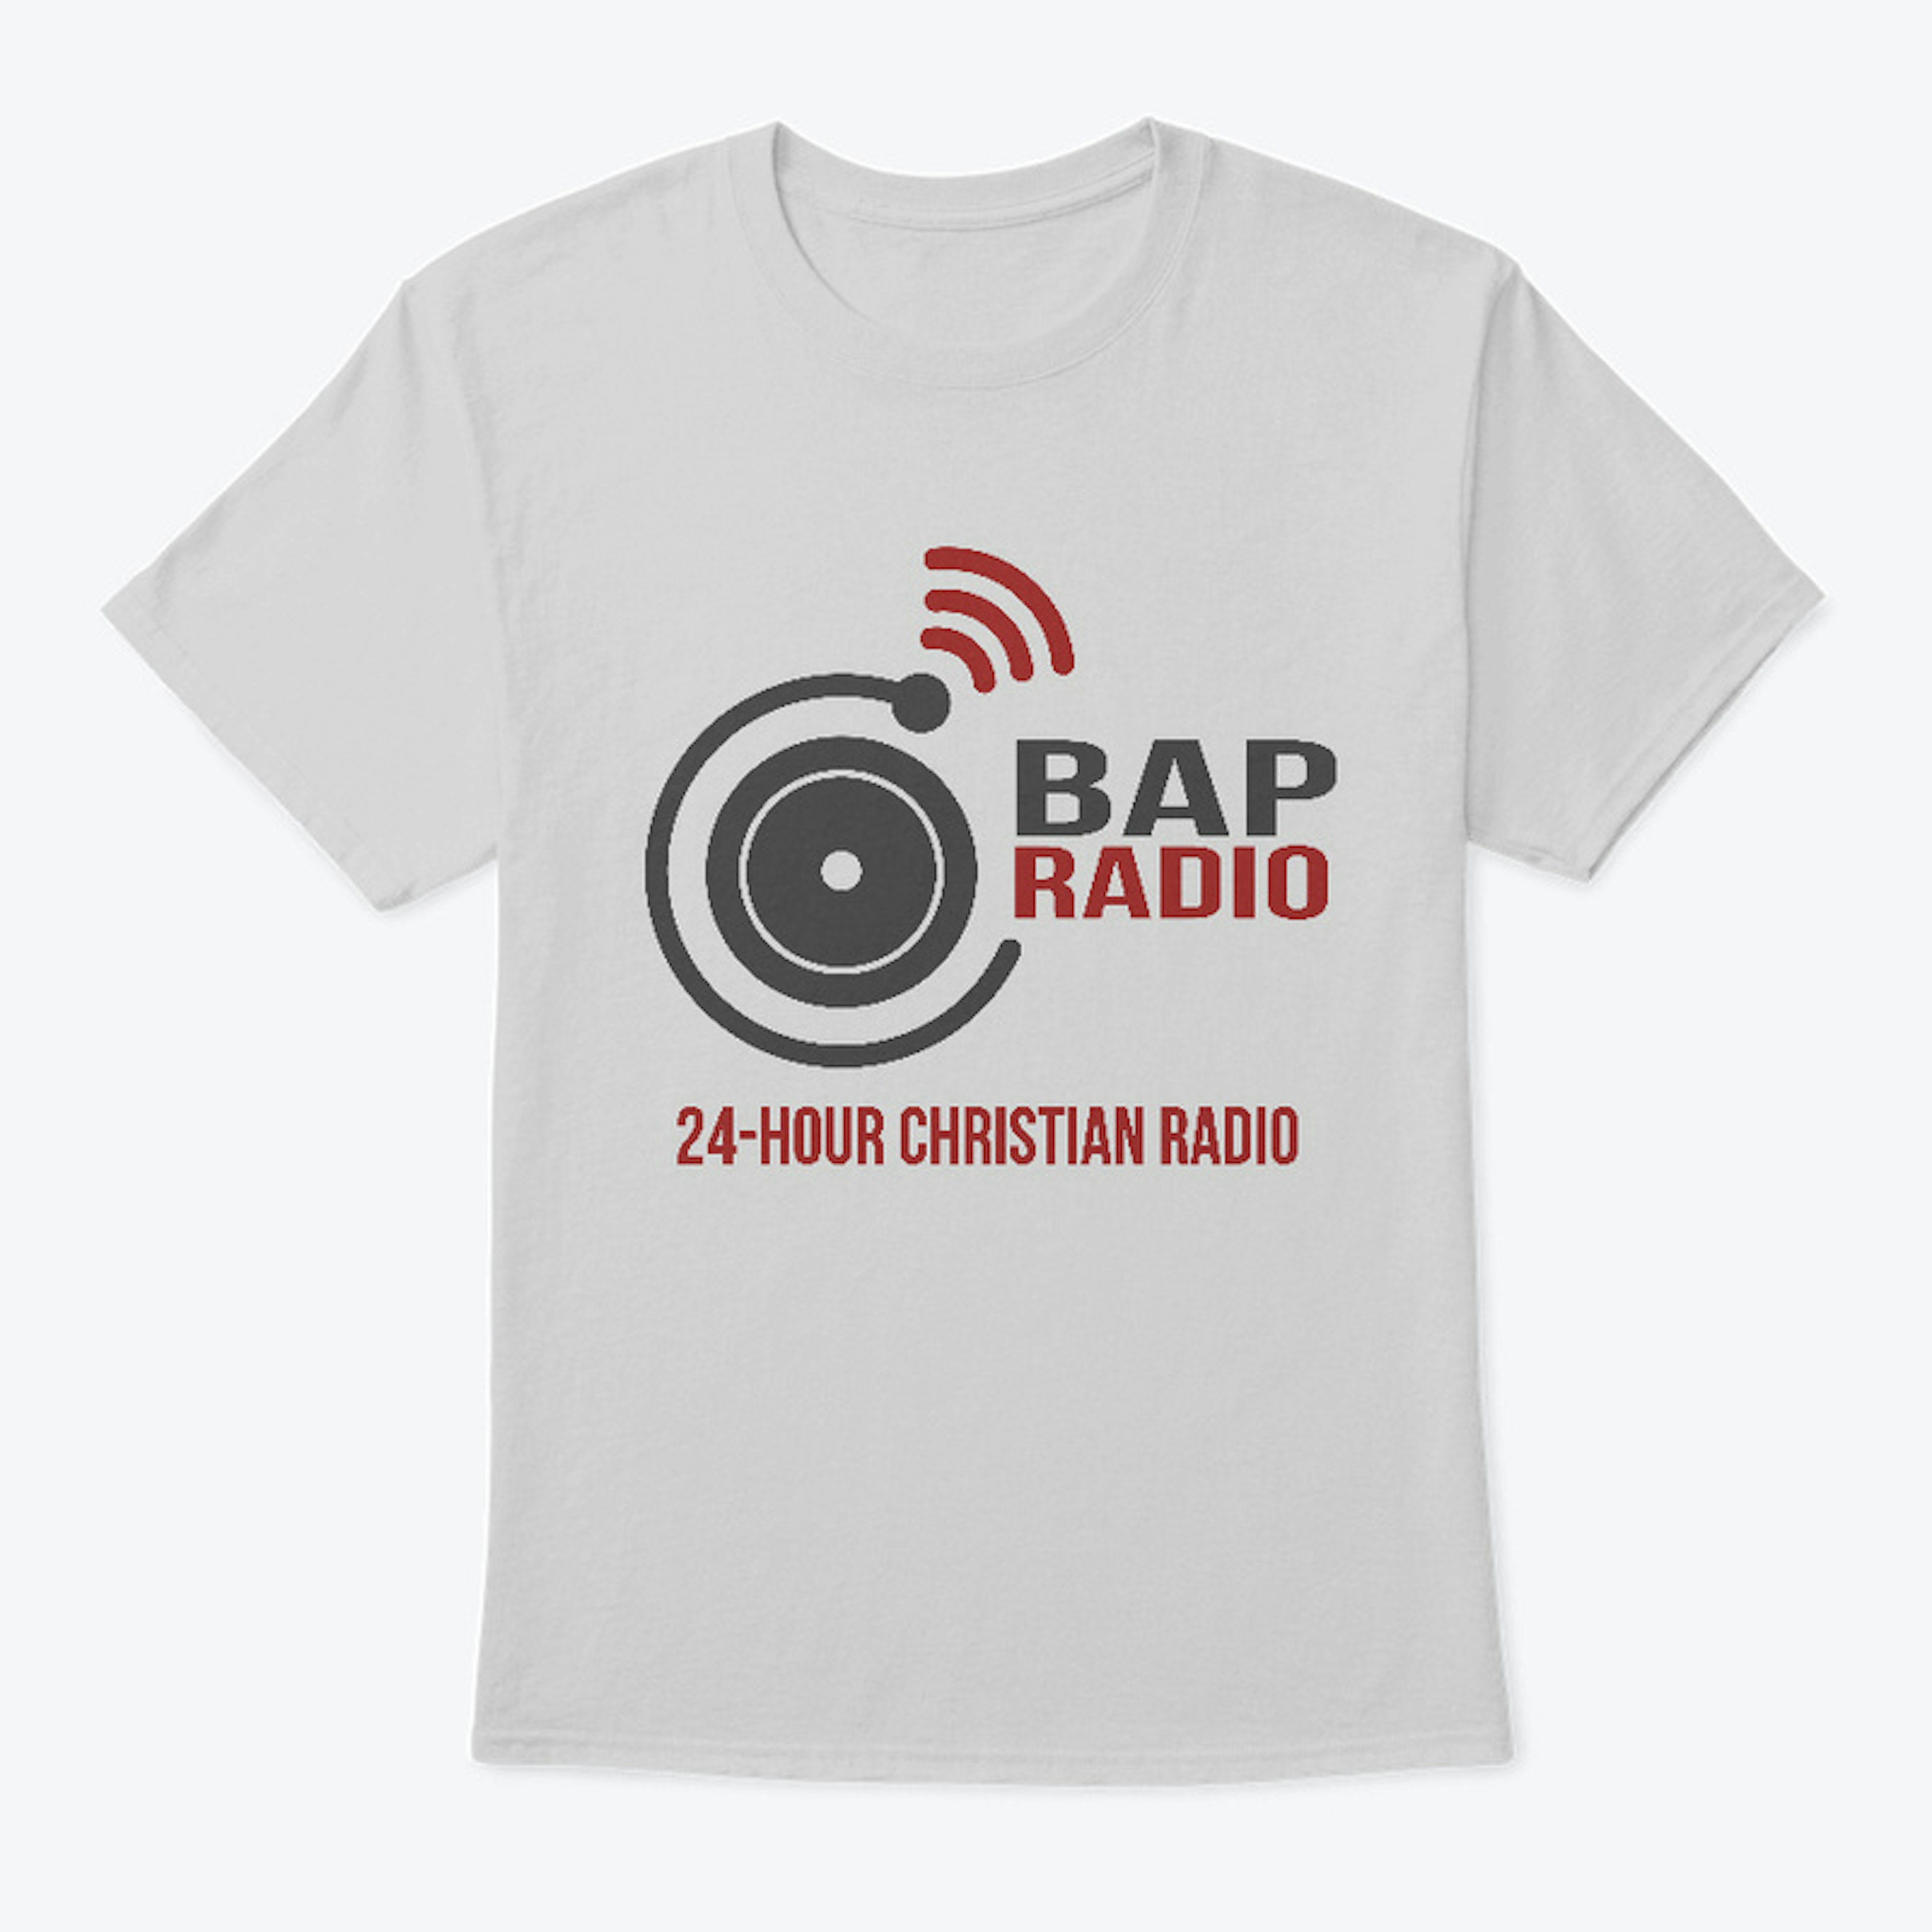 Bap Radio 24-Hour Christian Radio